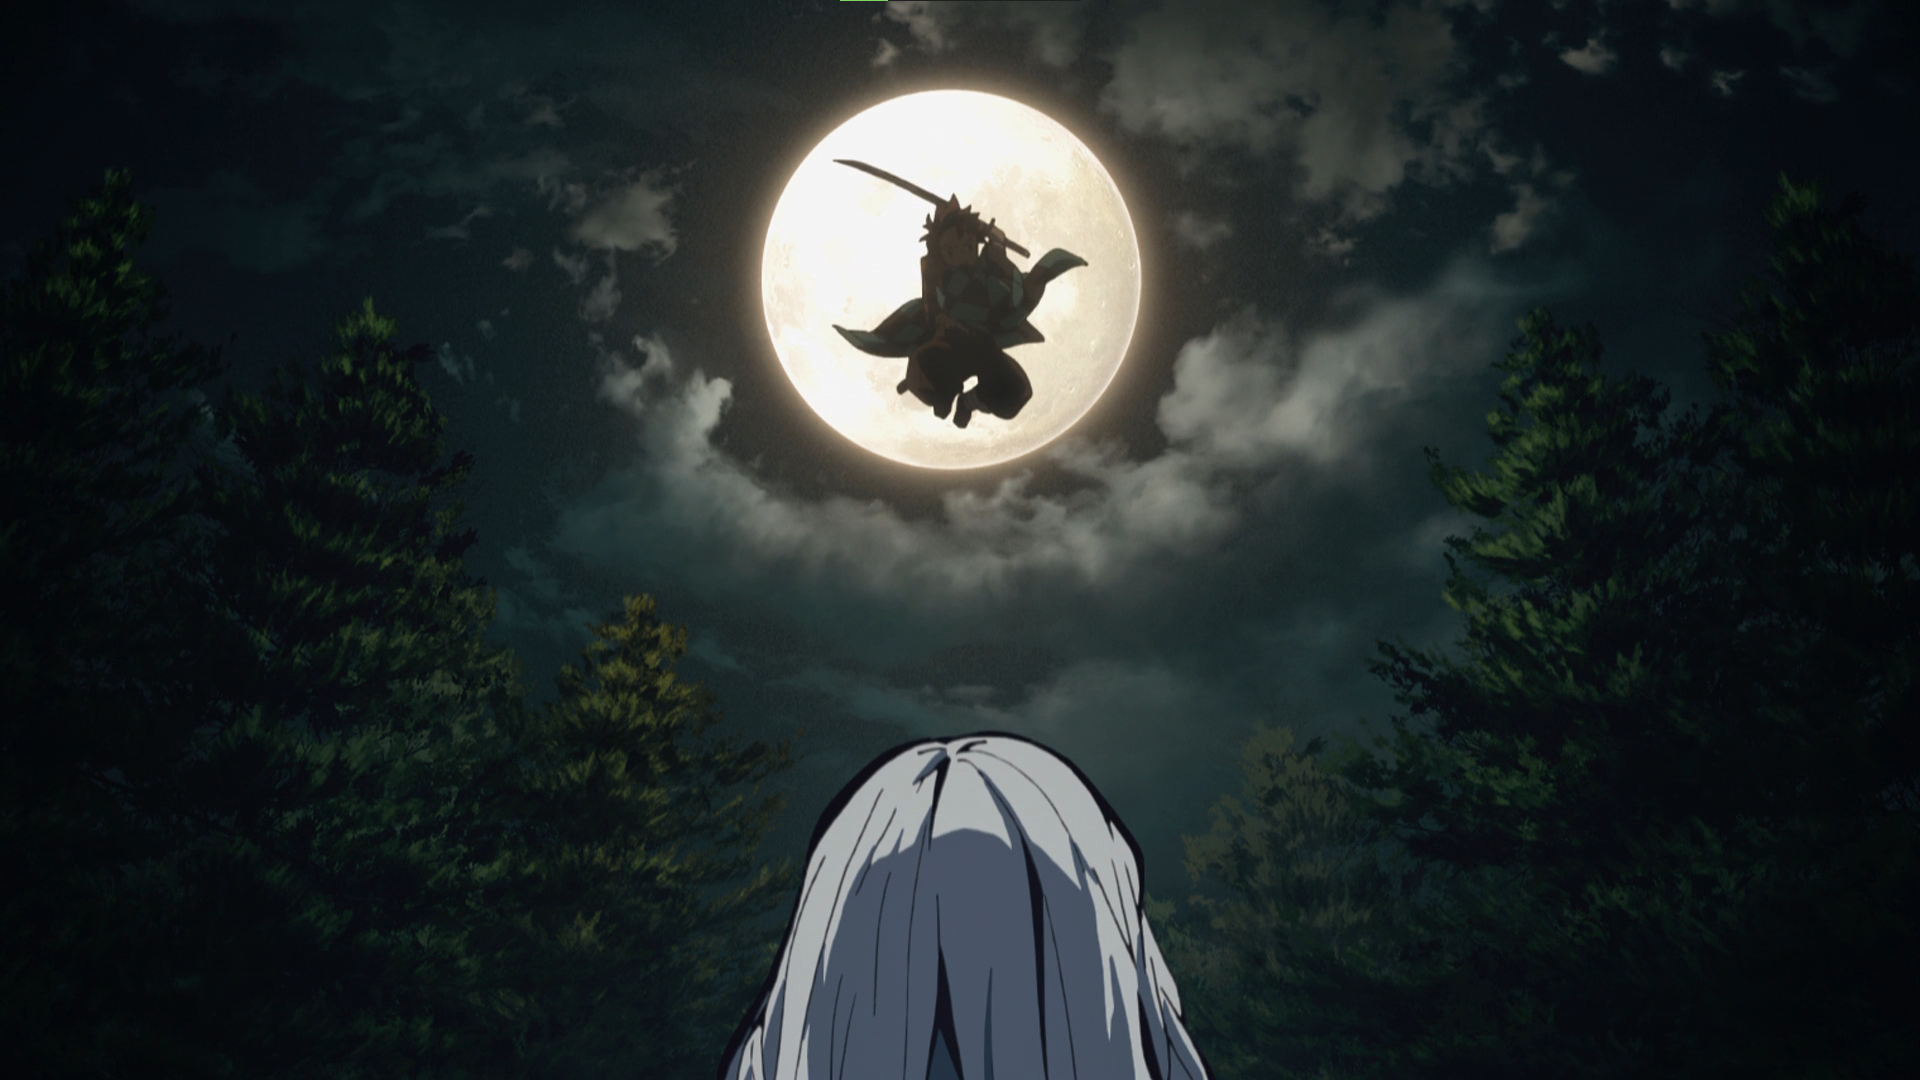 Anime 1920x1080 Kimetsu no Yaiba Kamado Tanjiro demon sword Moon forest trees anime Anime screenshot anime boys clouds sky anime girls night